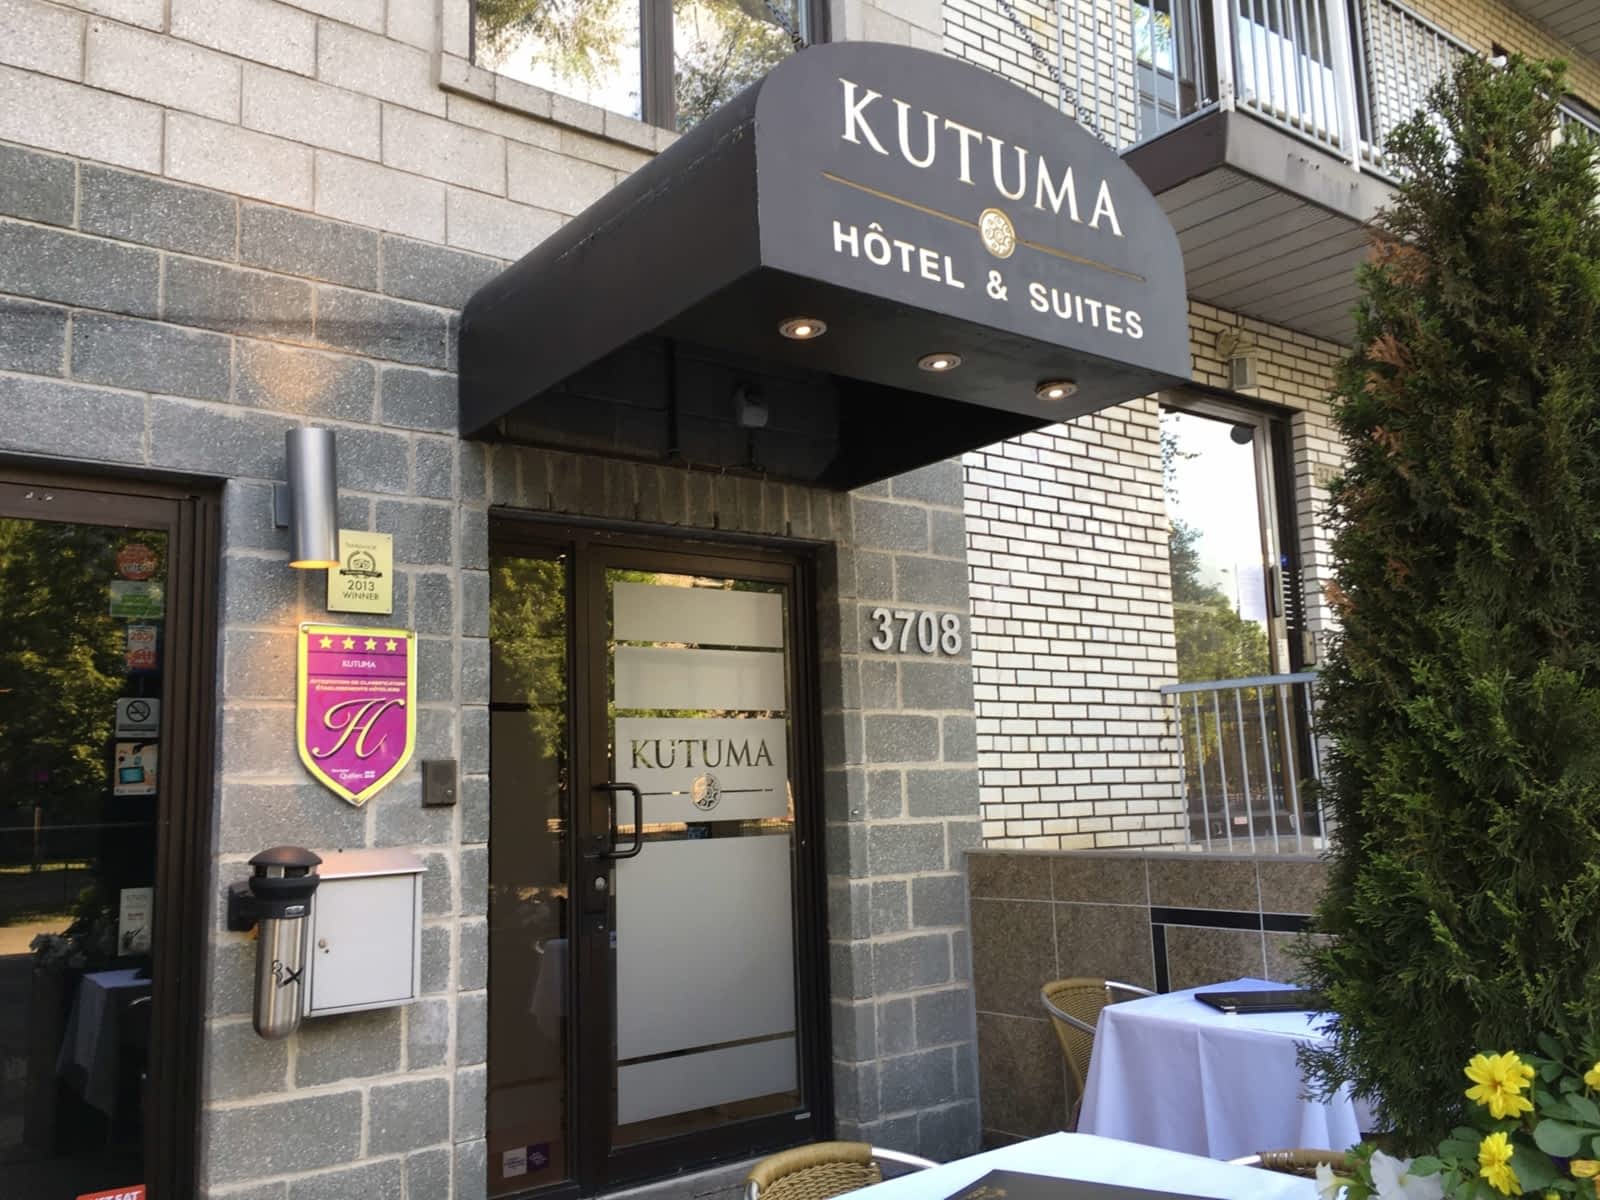 Kutuma Hotel Suites Opening Hours 3708 Rue Saint - 